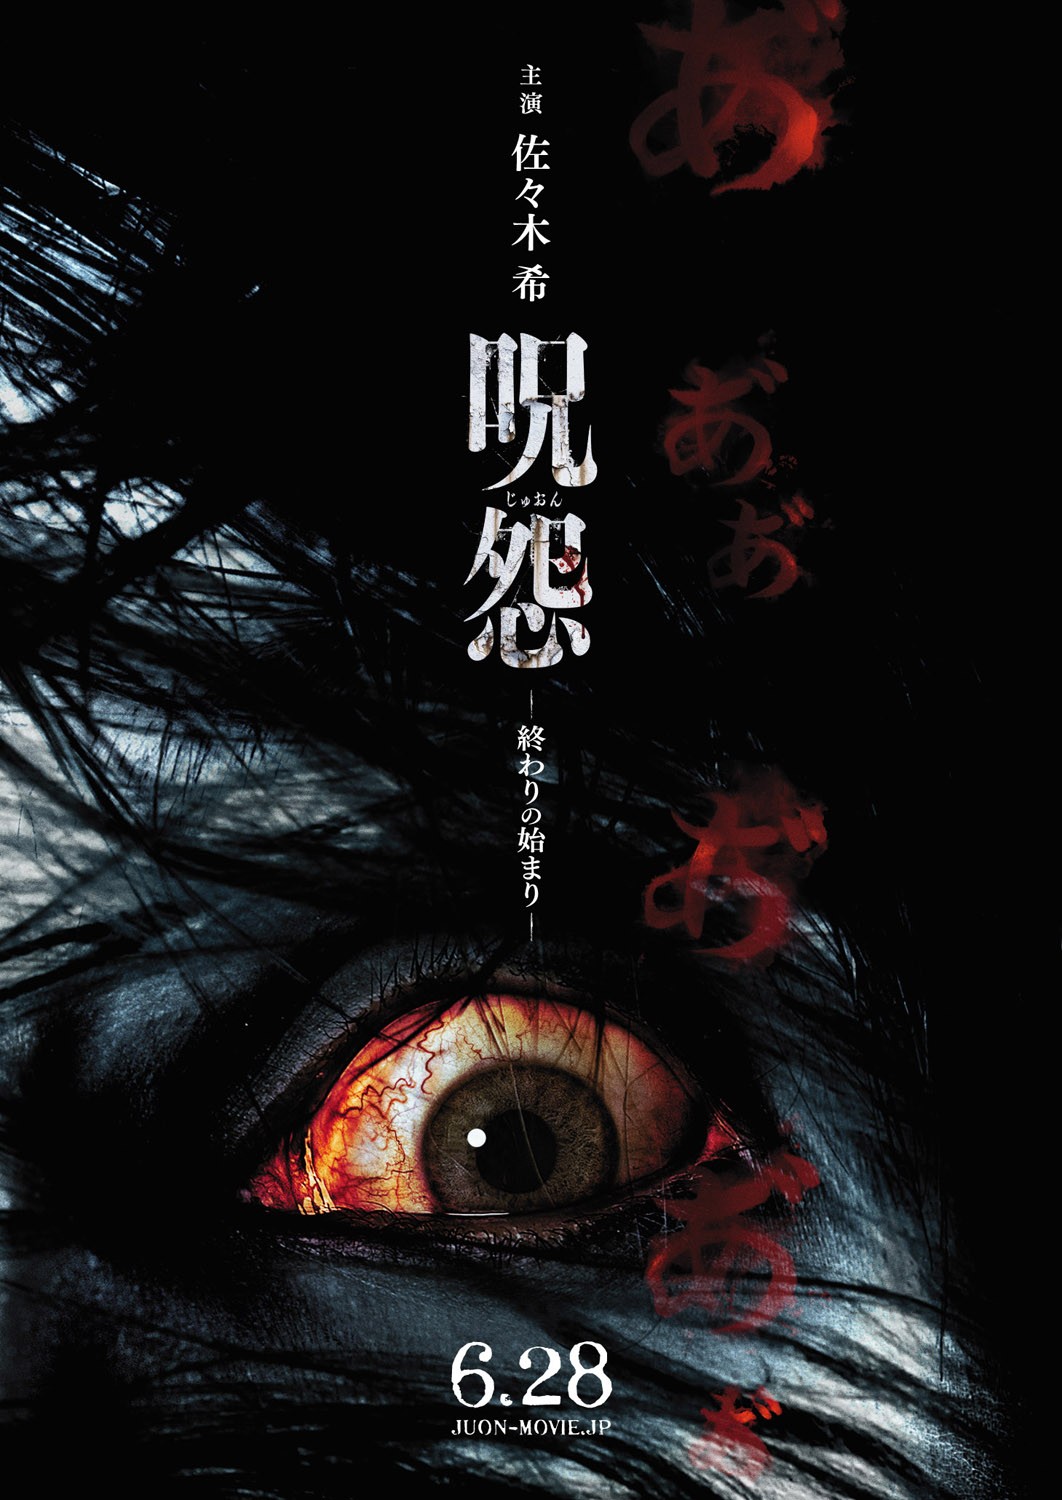 Extra Large Movie Poster Image for Ju-on: Owari no hajimari (#1 of 3)